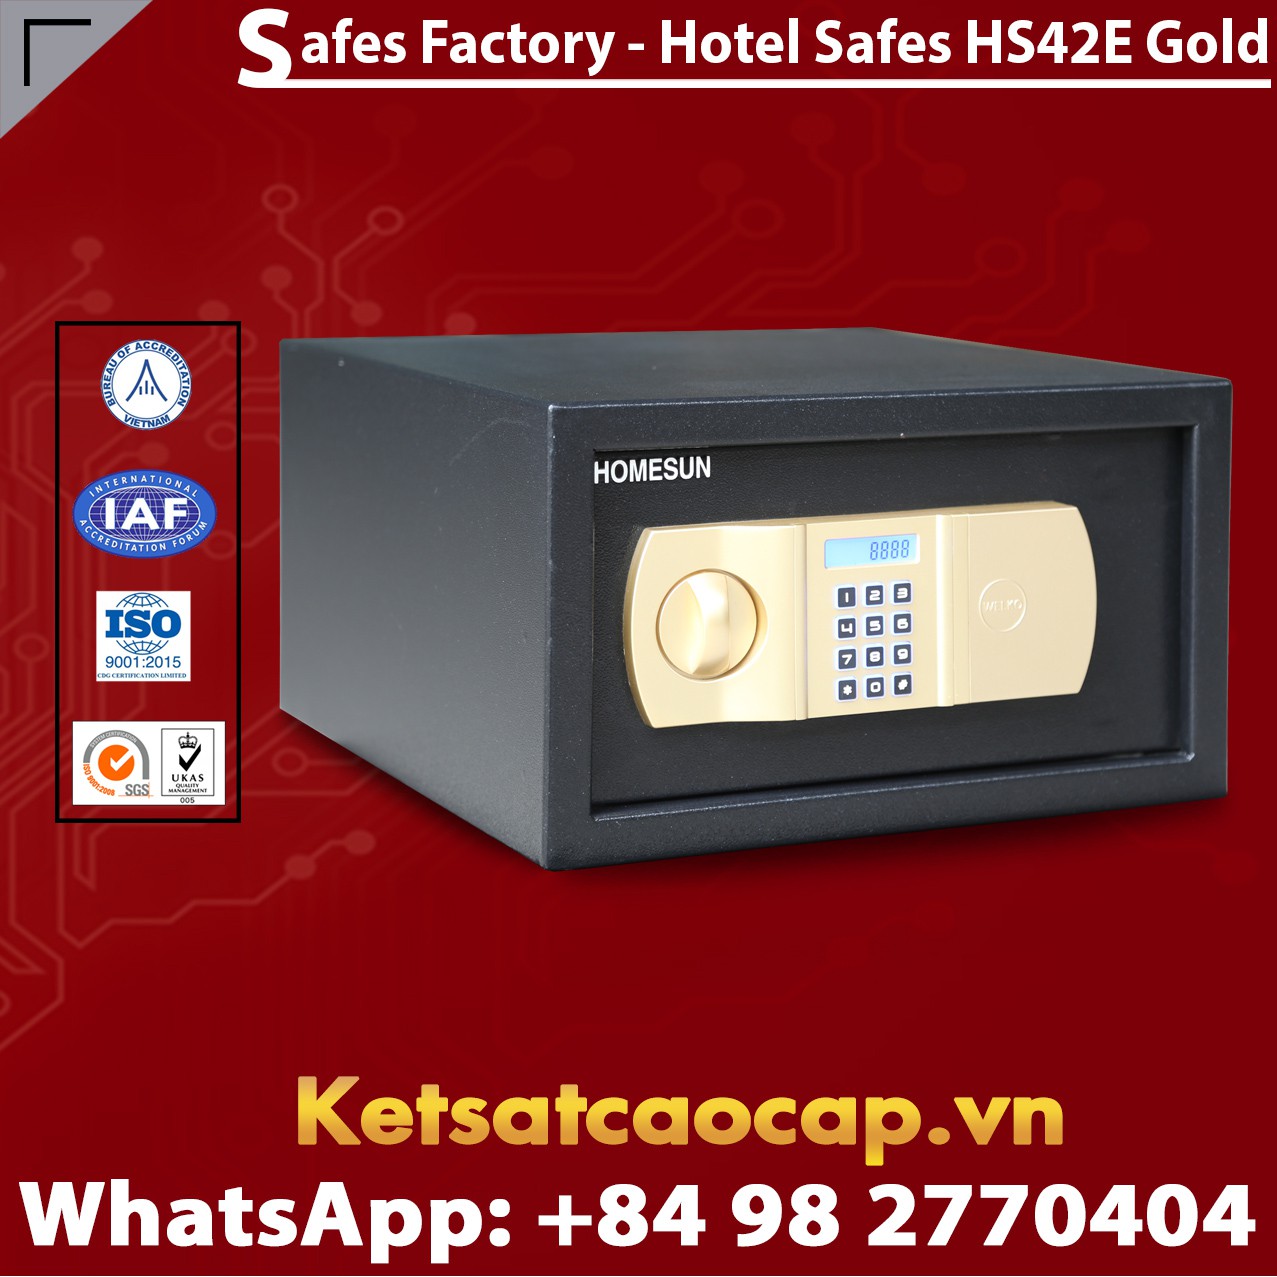 Best Sellers In Hotel Safes HOMESUN HS42 E Gold